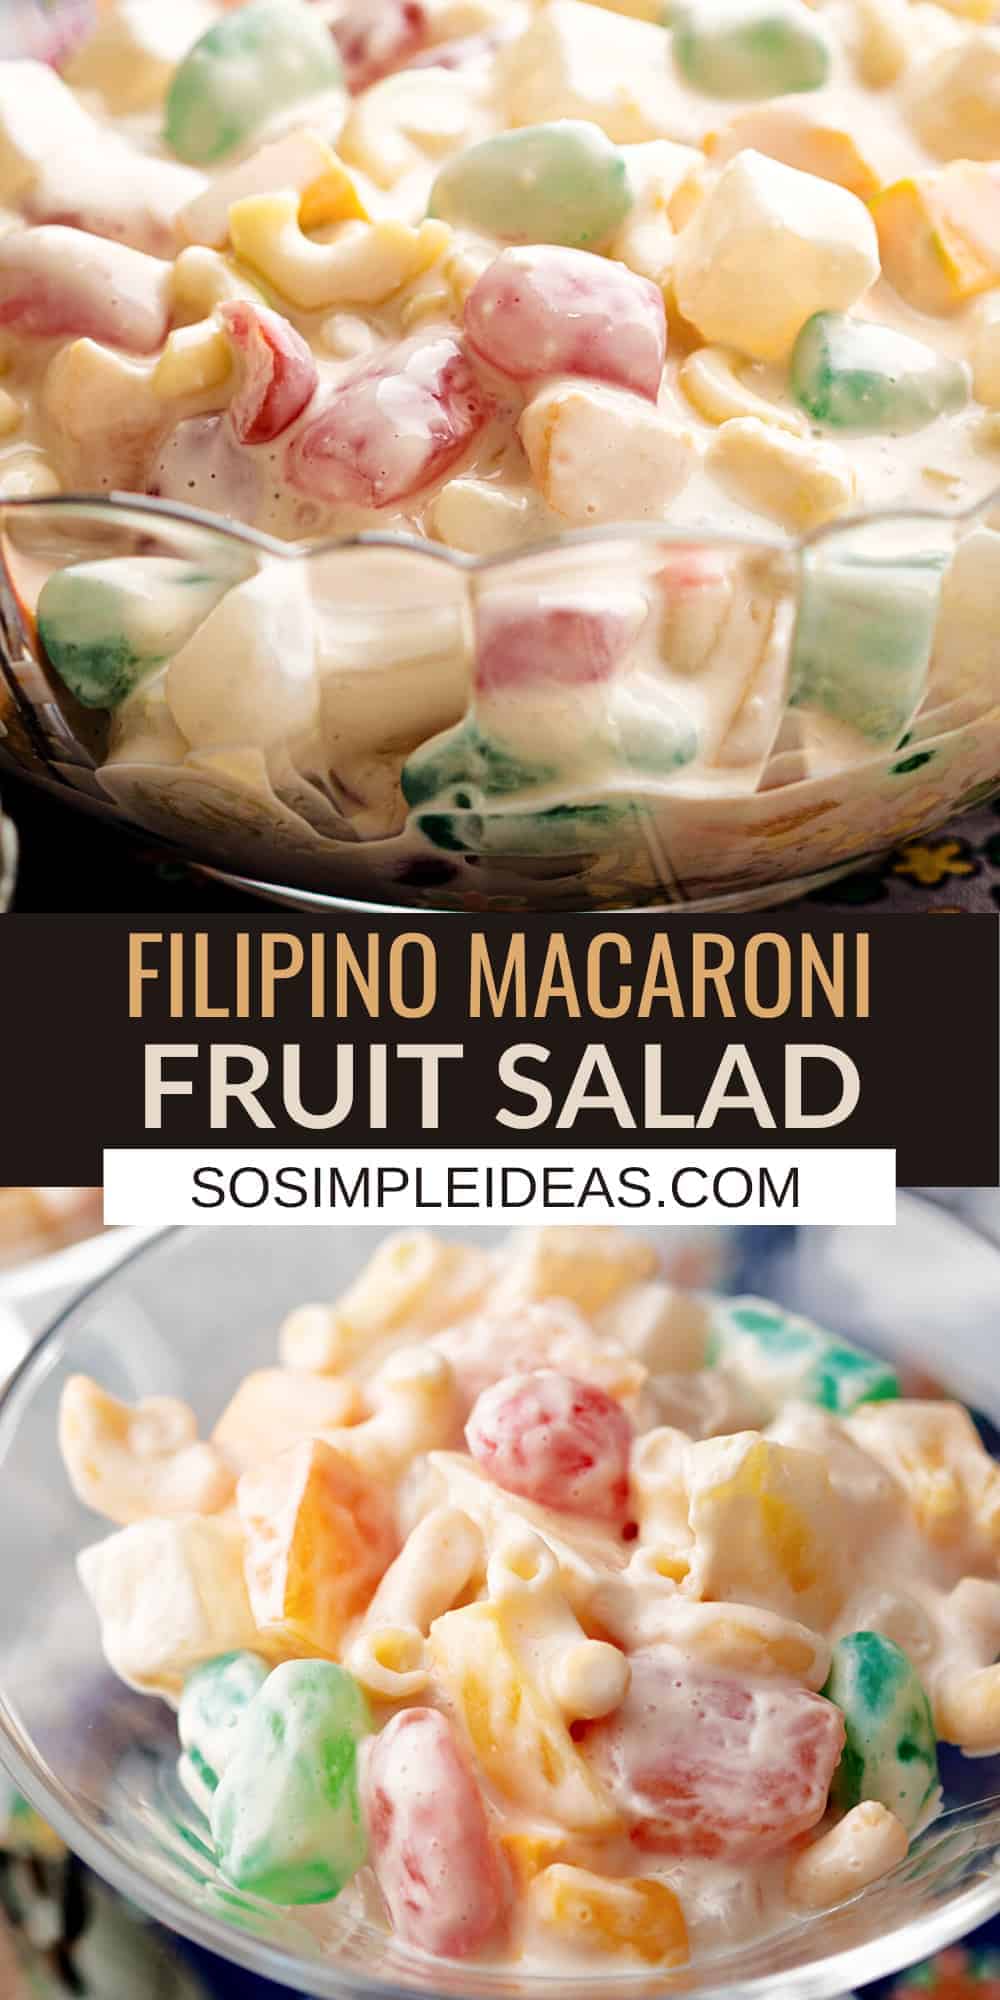 macaroni fruit salad pinterest image.